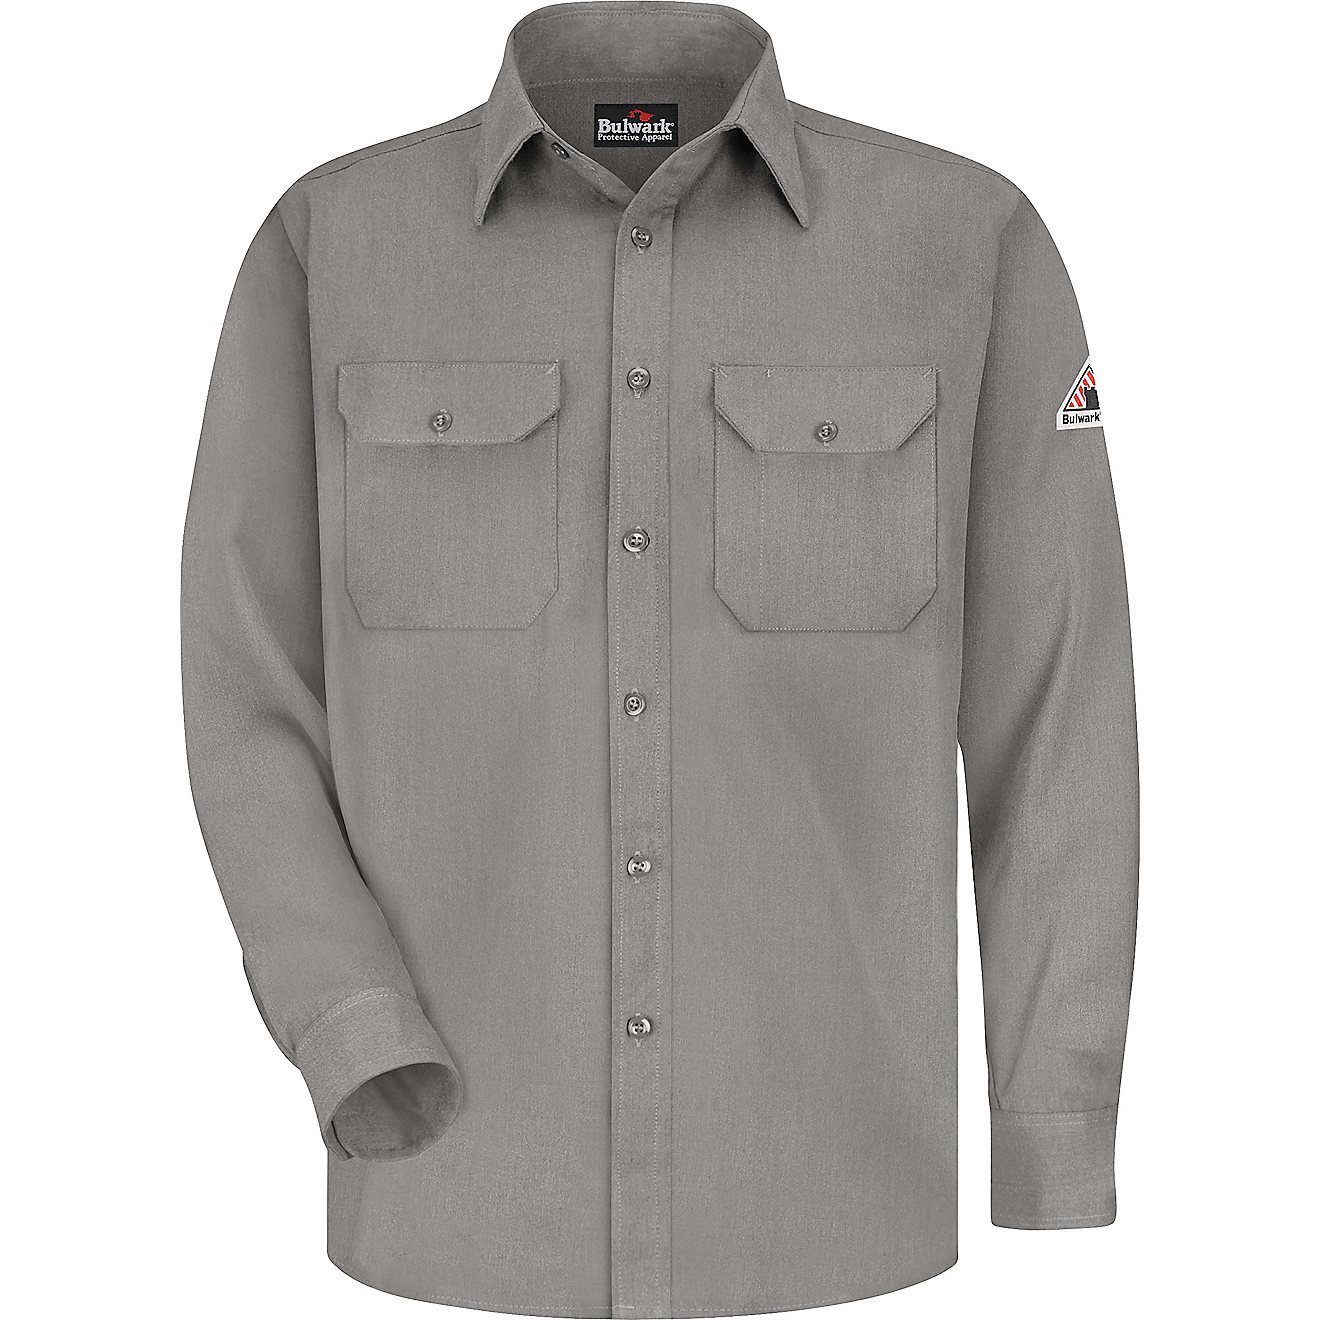 Bulwark Men's CoolTouch 2 Uniform Long Sleeve Work Shirt                                                                         - view number 1